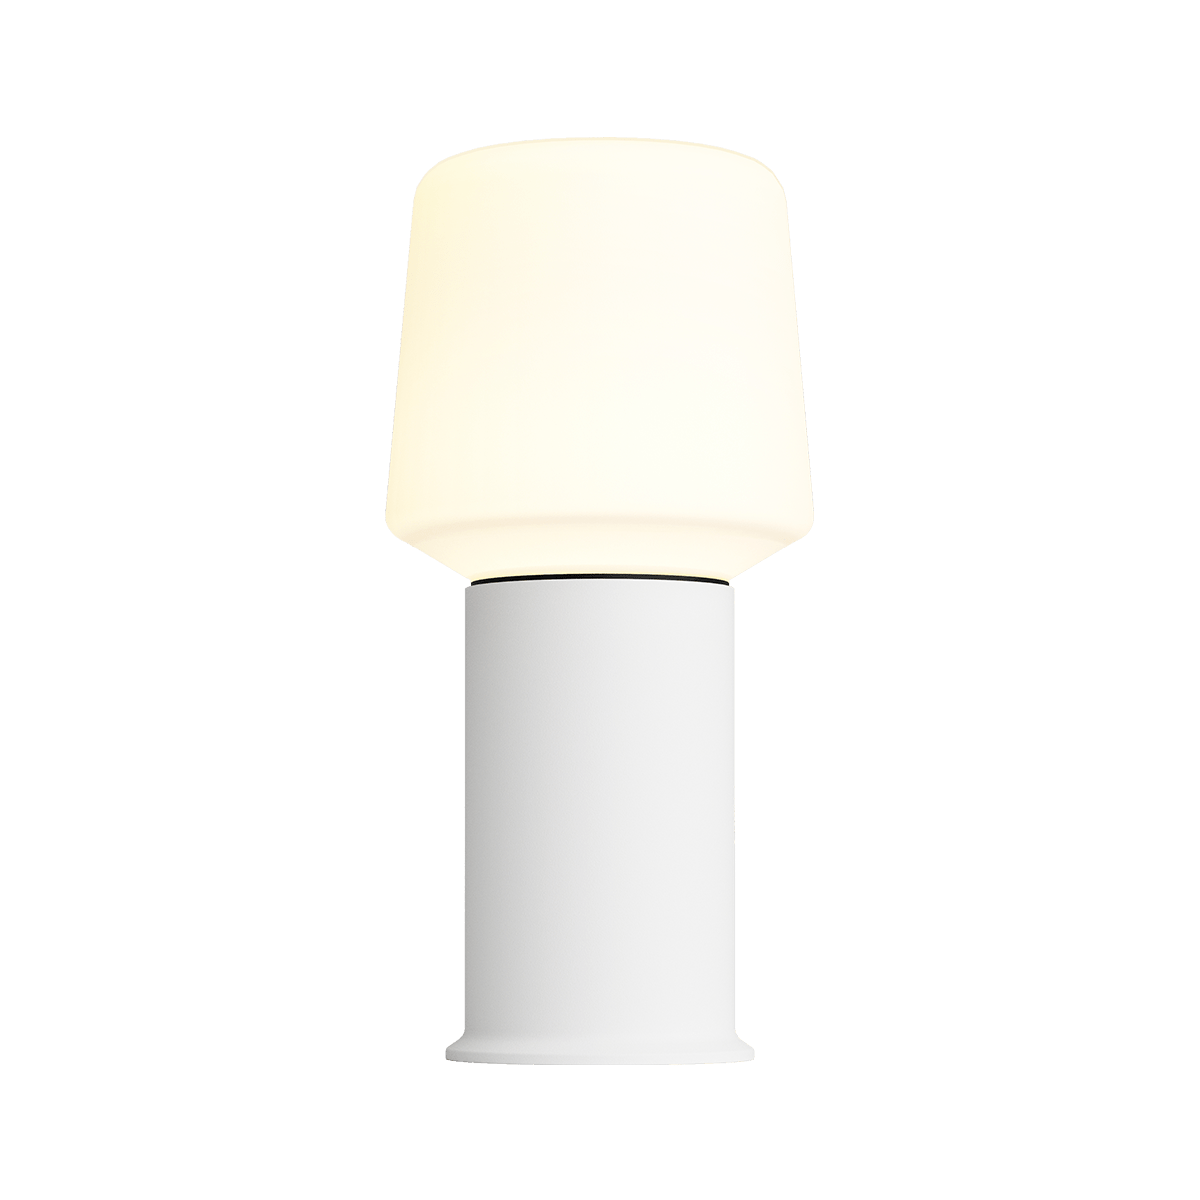 variant_600226% | Ambience - Lamp Intelligent + London base - White 10 | SACKit